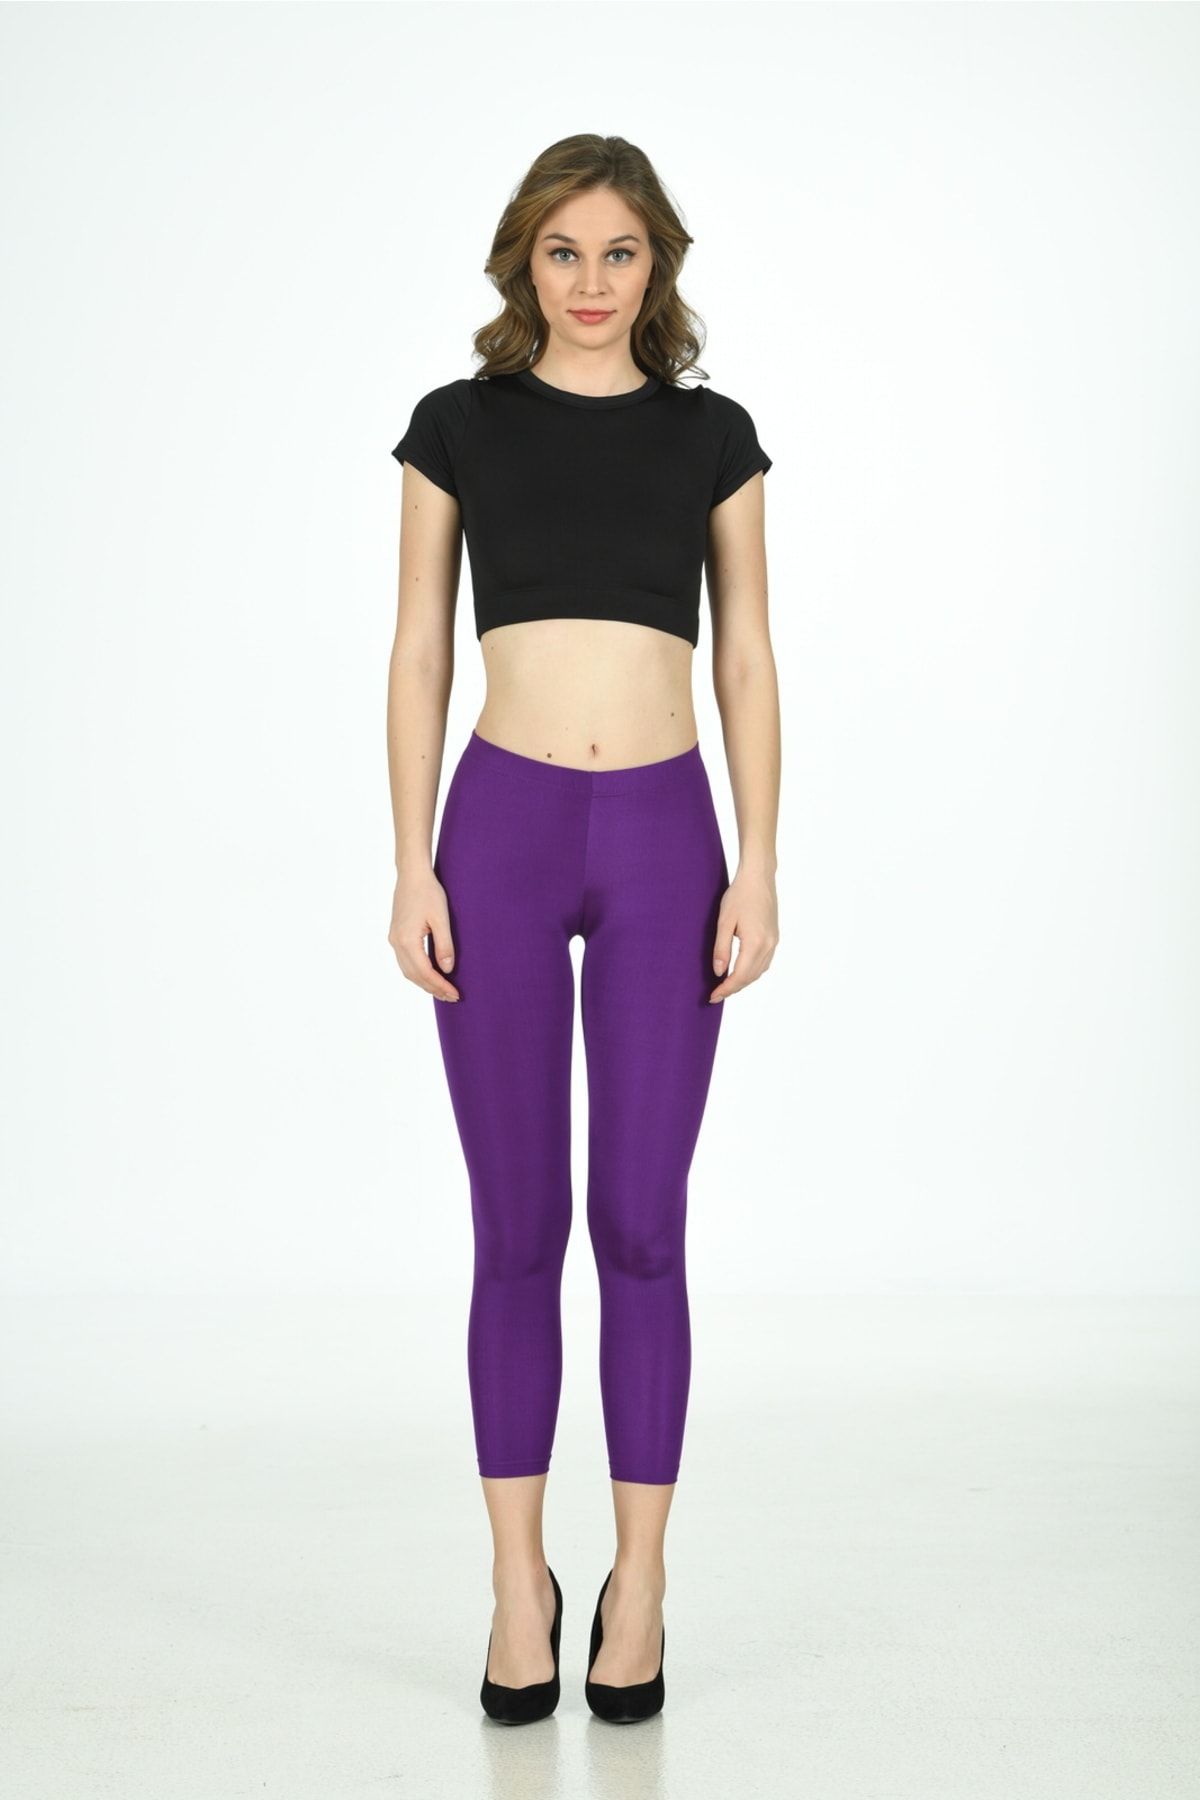 FATELLA Women's High Waist Purple Shiny Tights - Trendyol